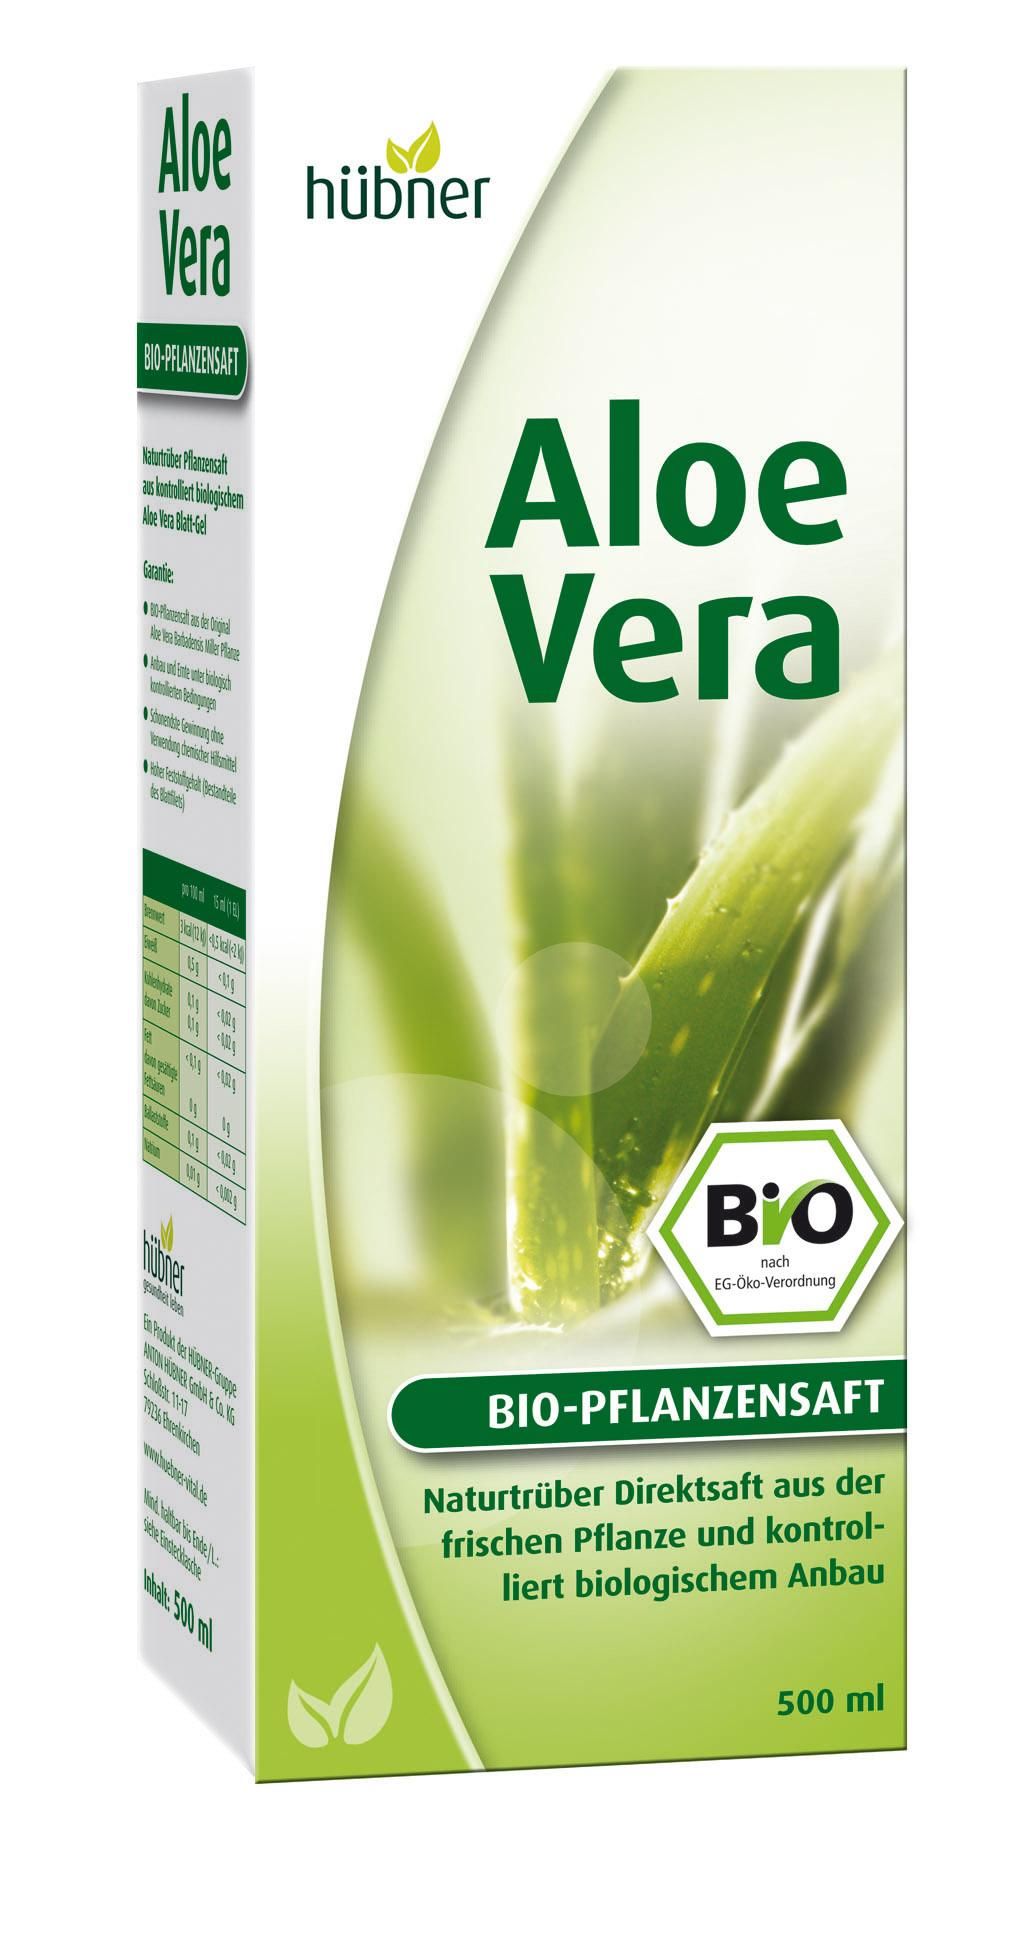 Hübner Aloe Vera Biopflsaft